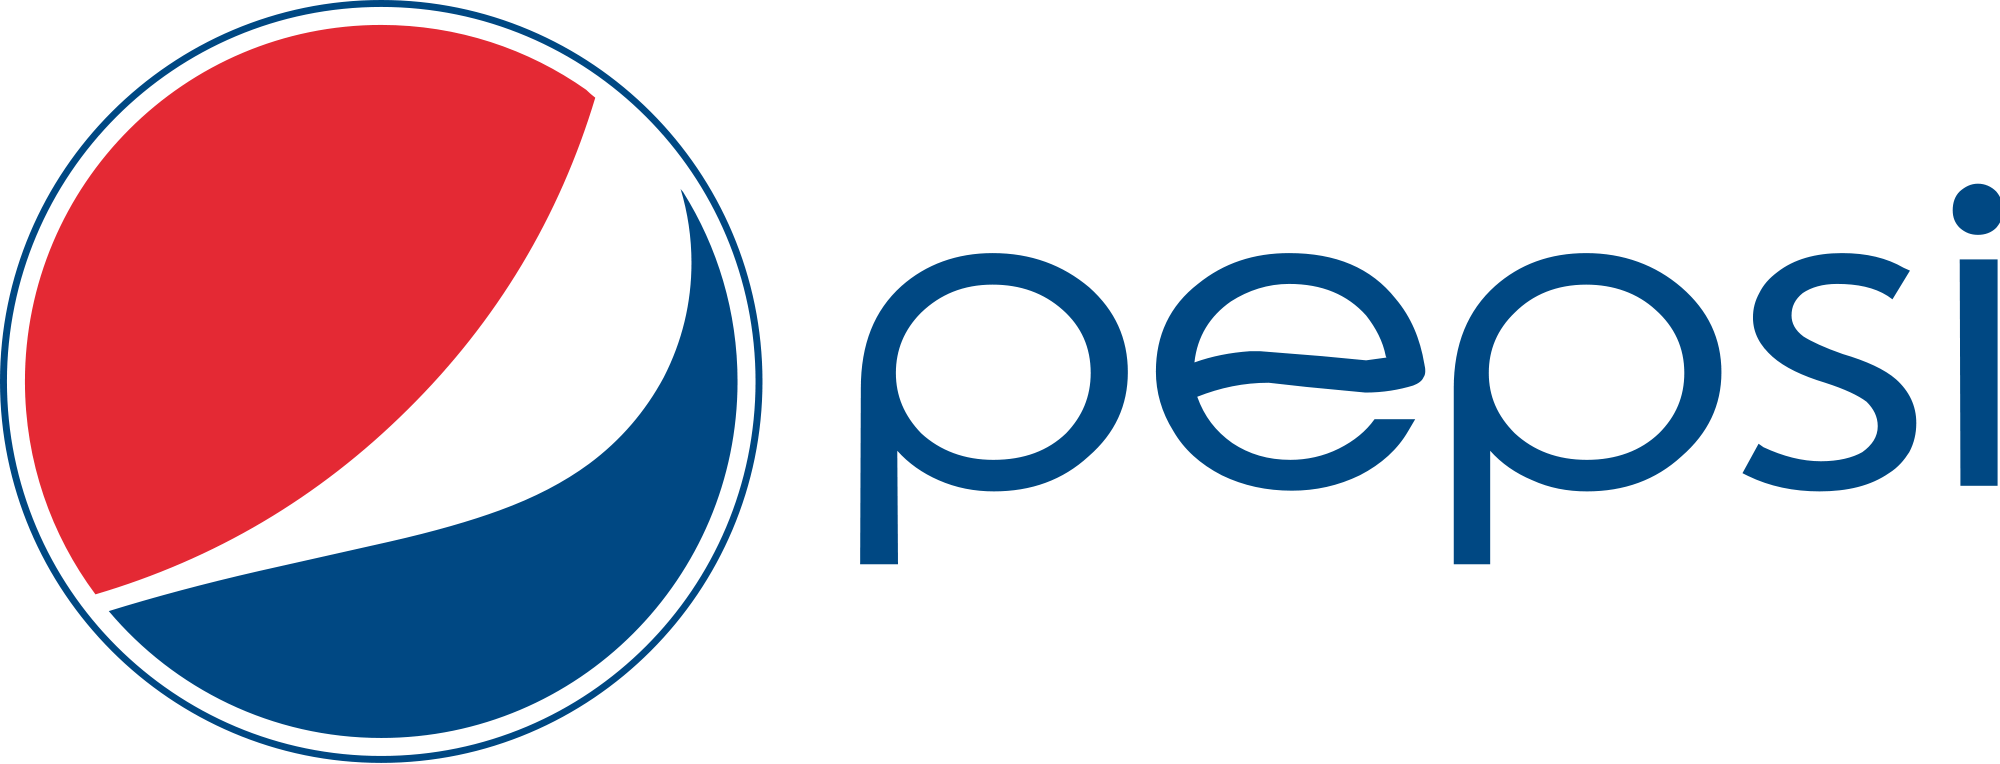 New Cisco logo; Logo of Pepsi